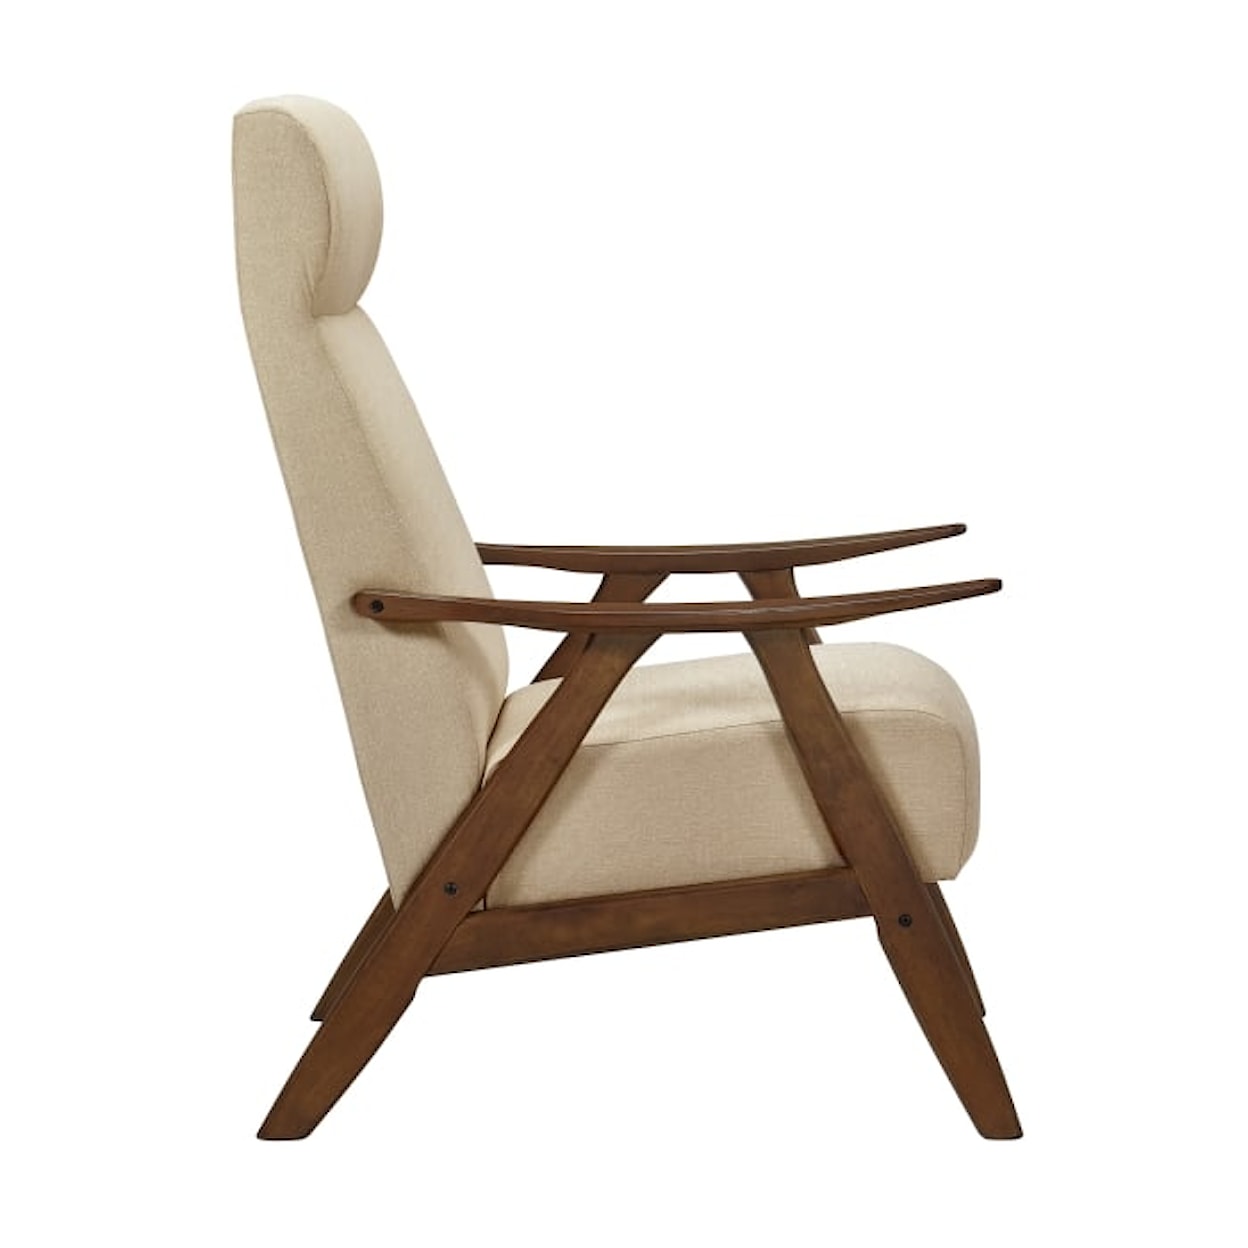 Homelegance Kalmar Accent Chair